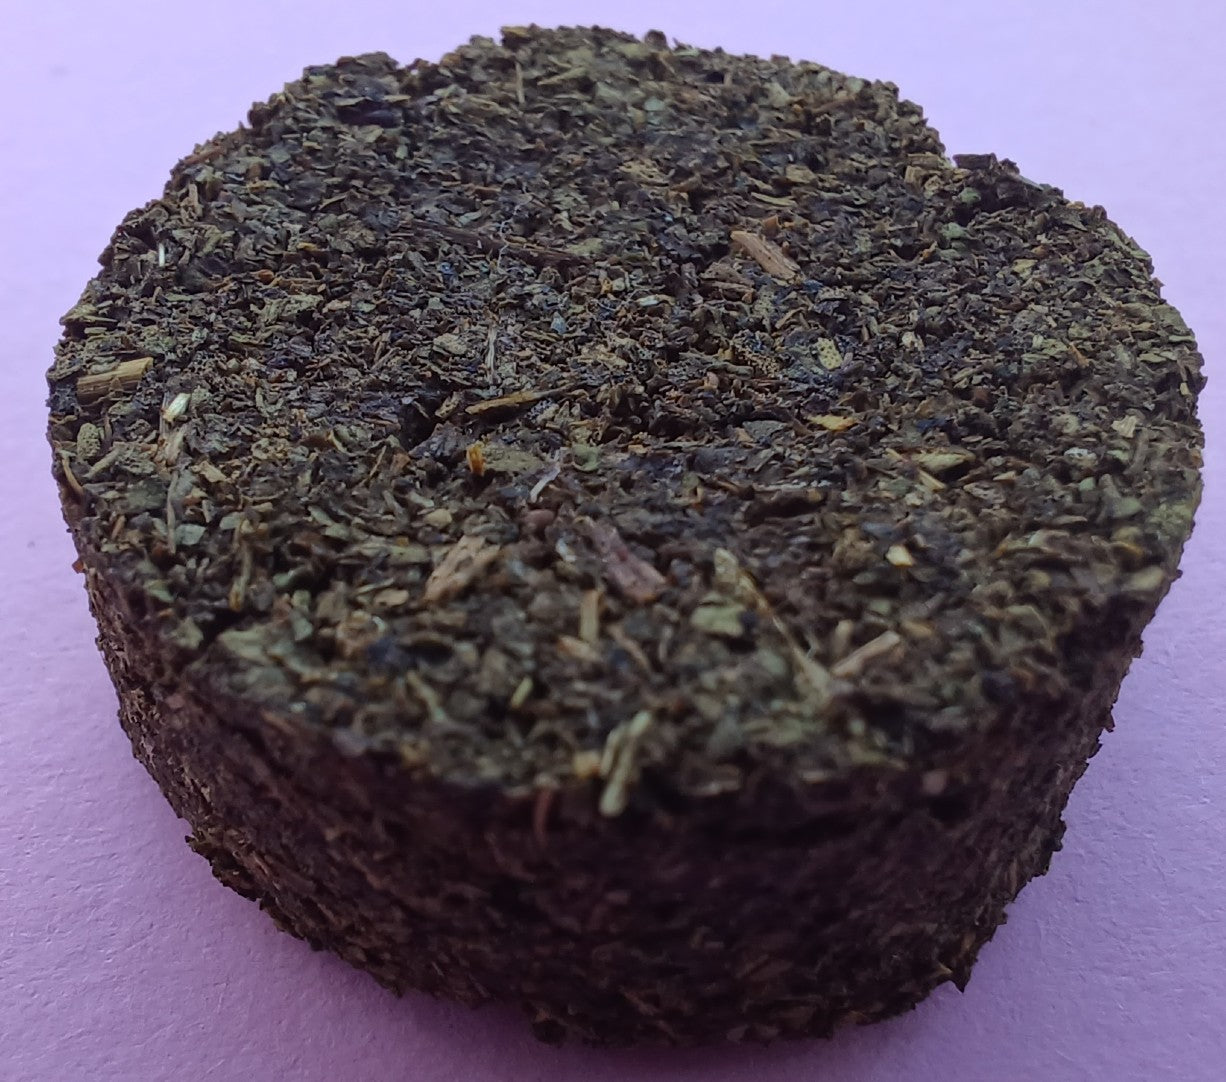 Herbalicious Bites - Basil, Mint & Thyme